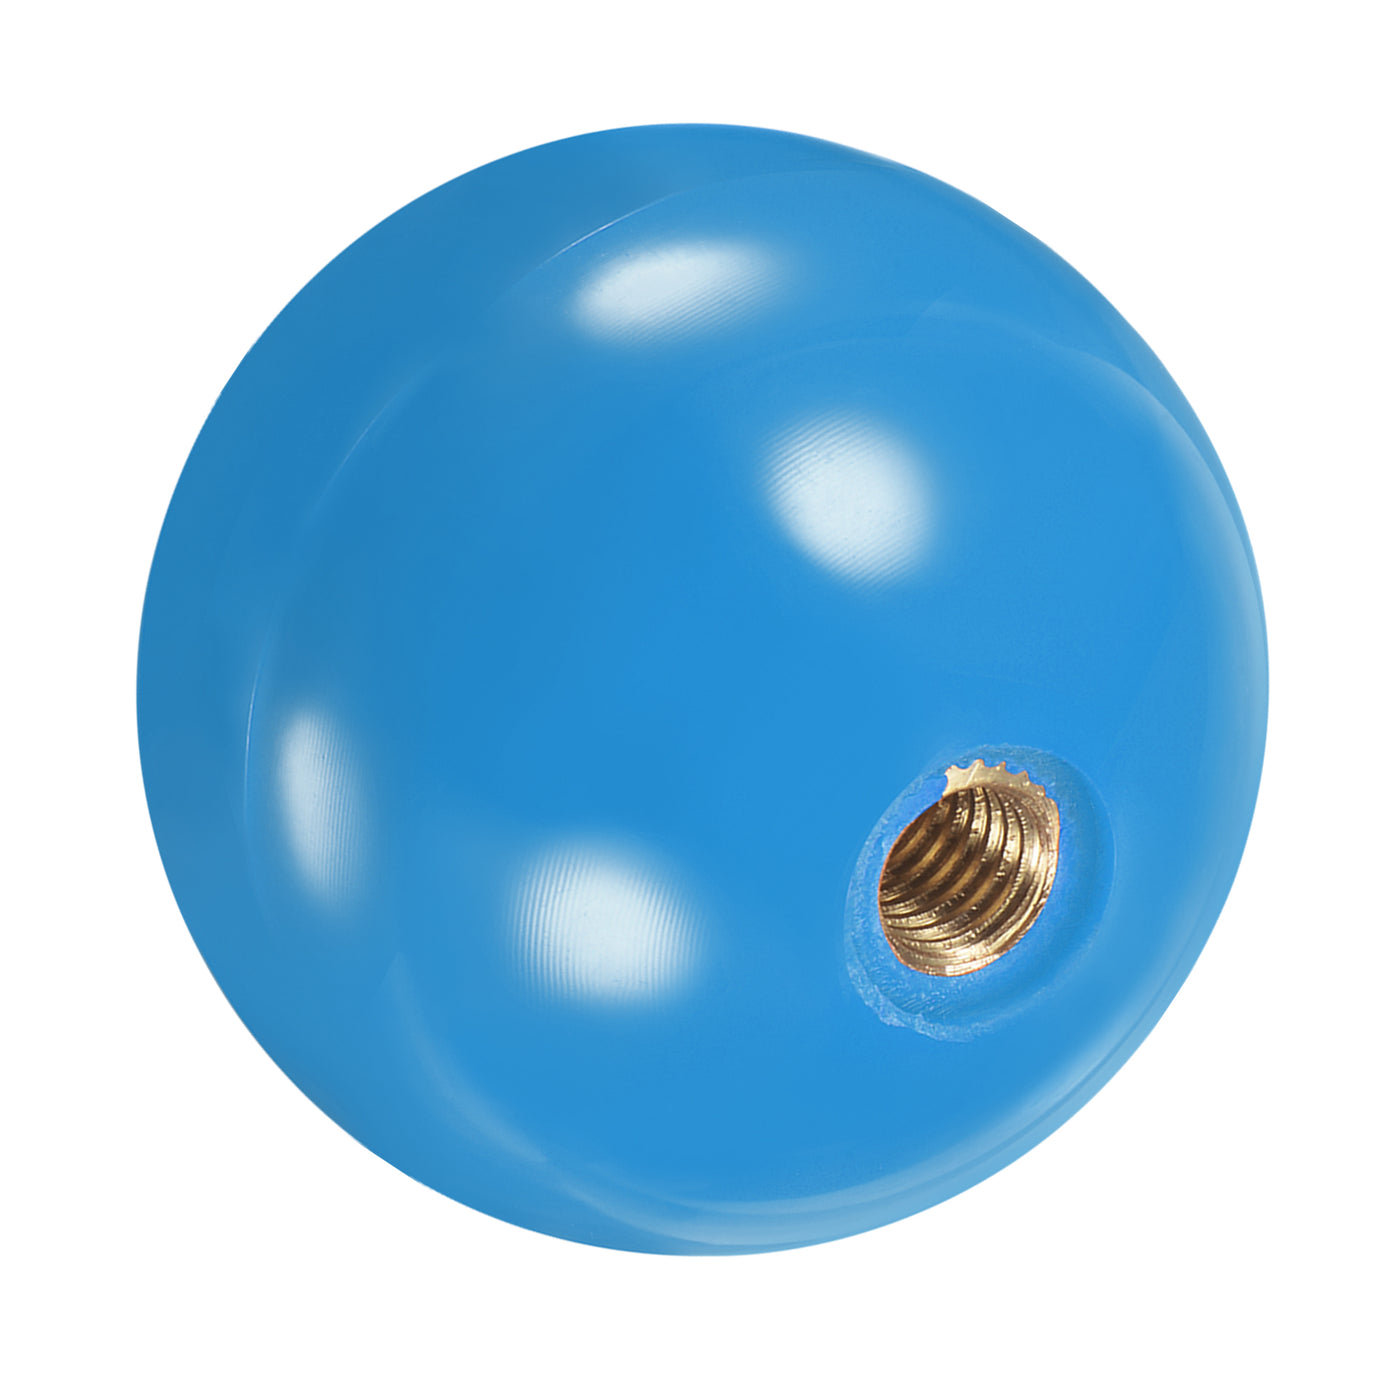 uxcell Uxcell Joystick Head Rocker Ball Top Handle Arcade Game Replacement Green/Blue